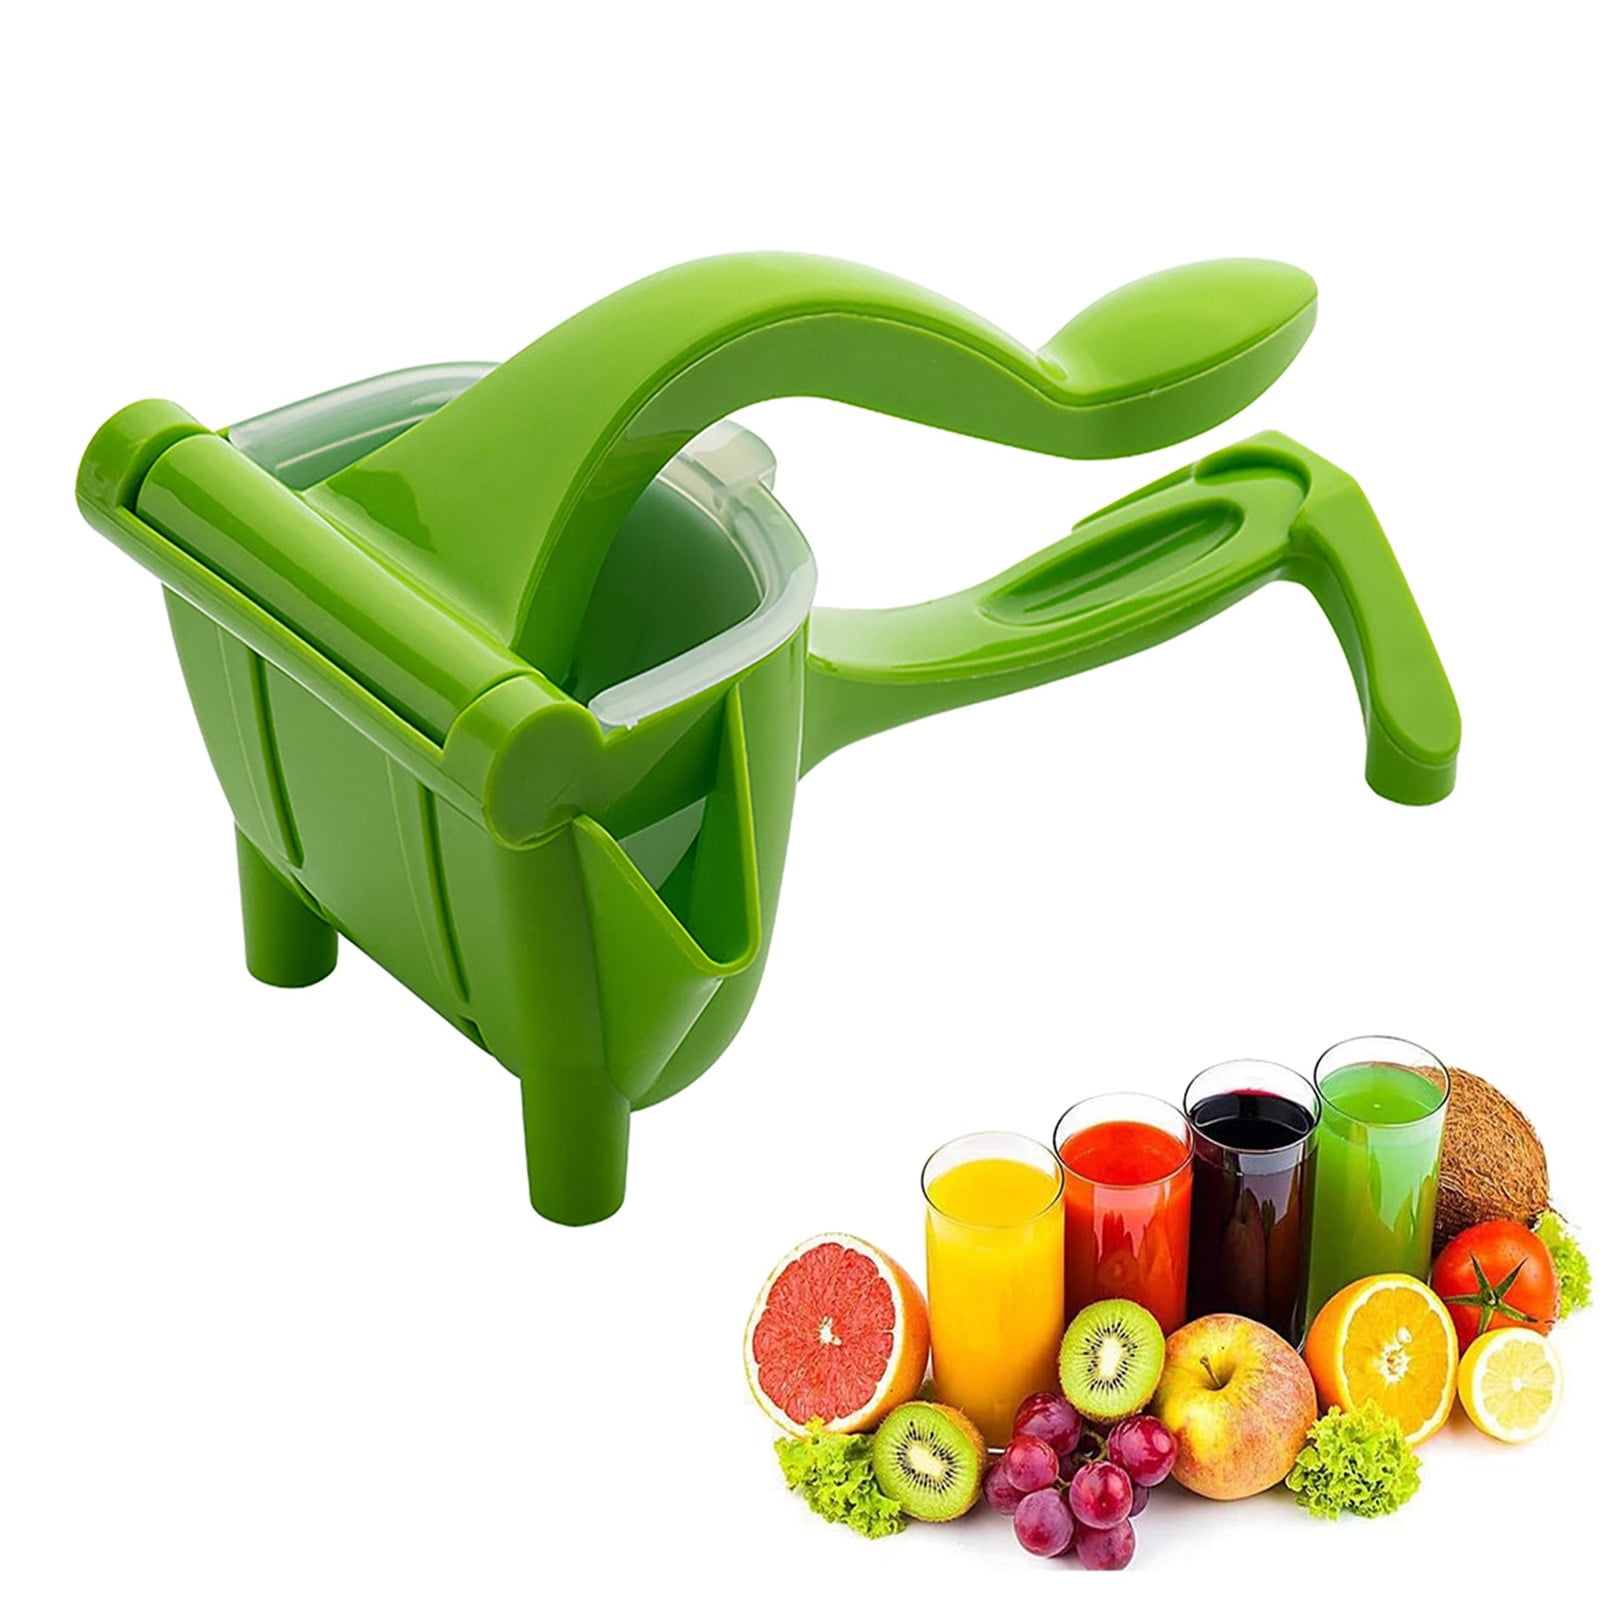 1xHeavy Duty Eco Juicer Manual Juice Press Squeezer Fruit Juicer Tools I9L8 